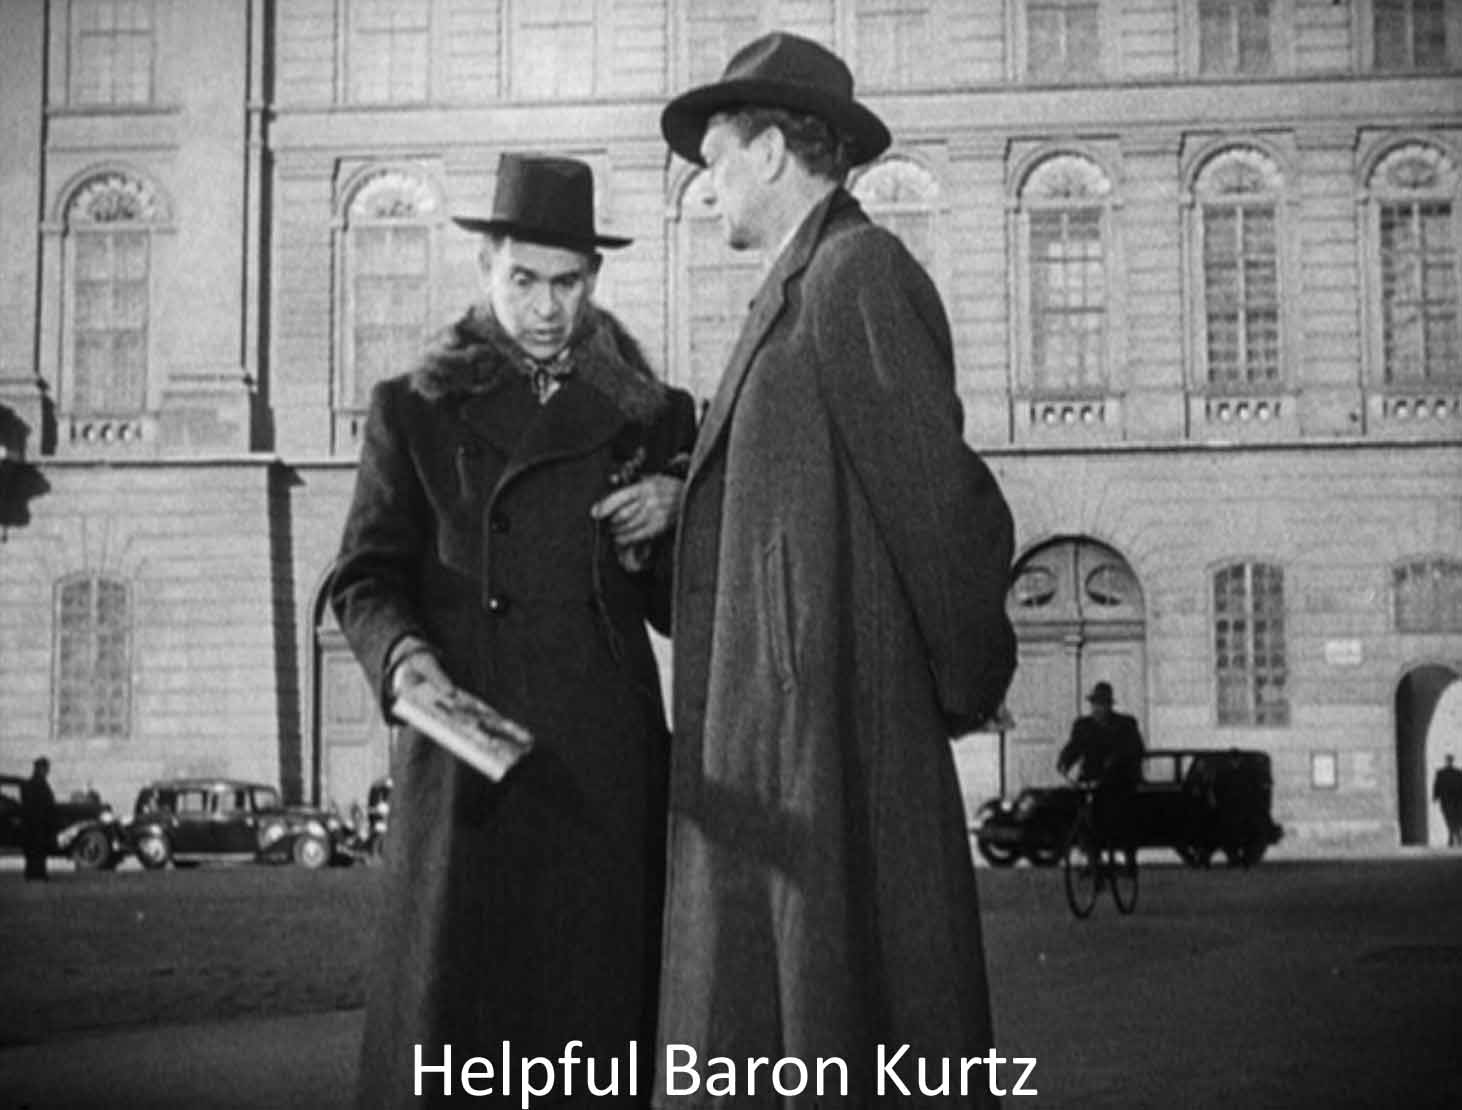 Helpful Baron Kurtz